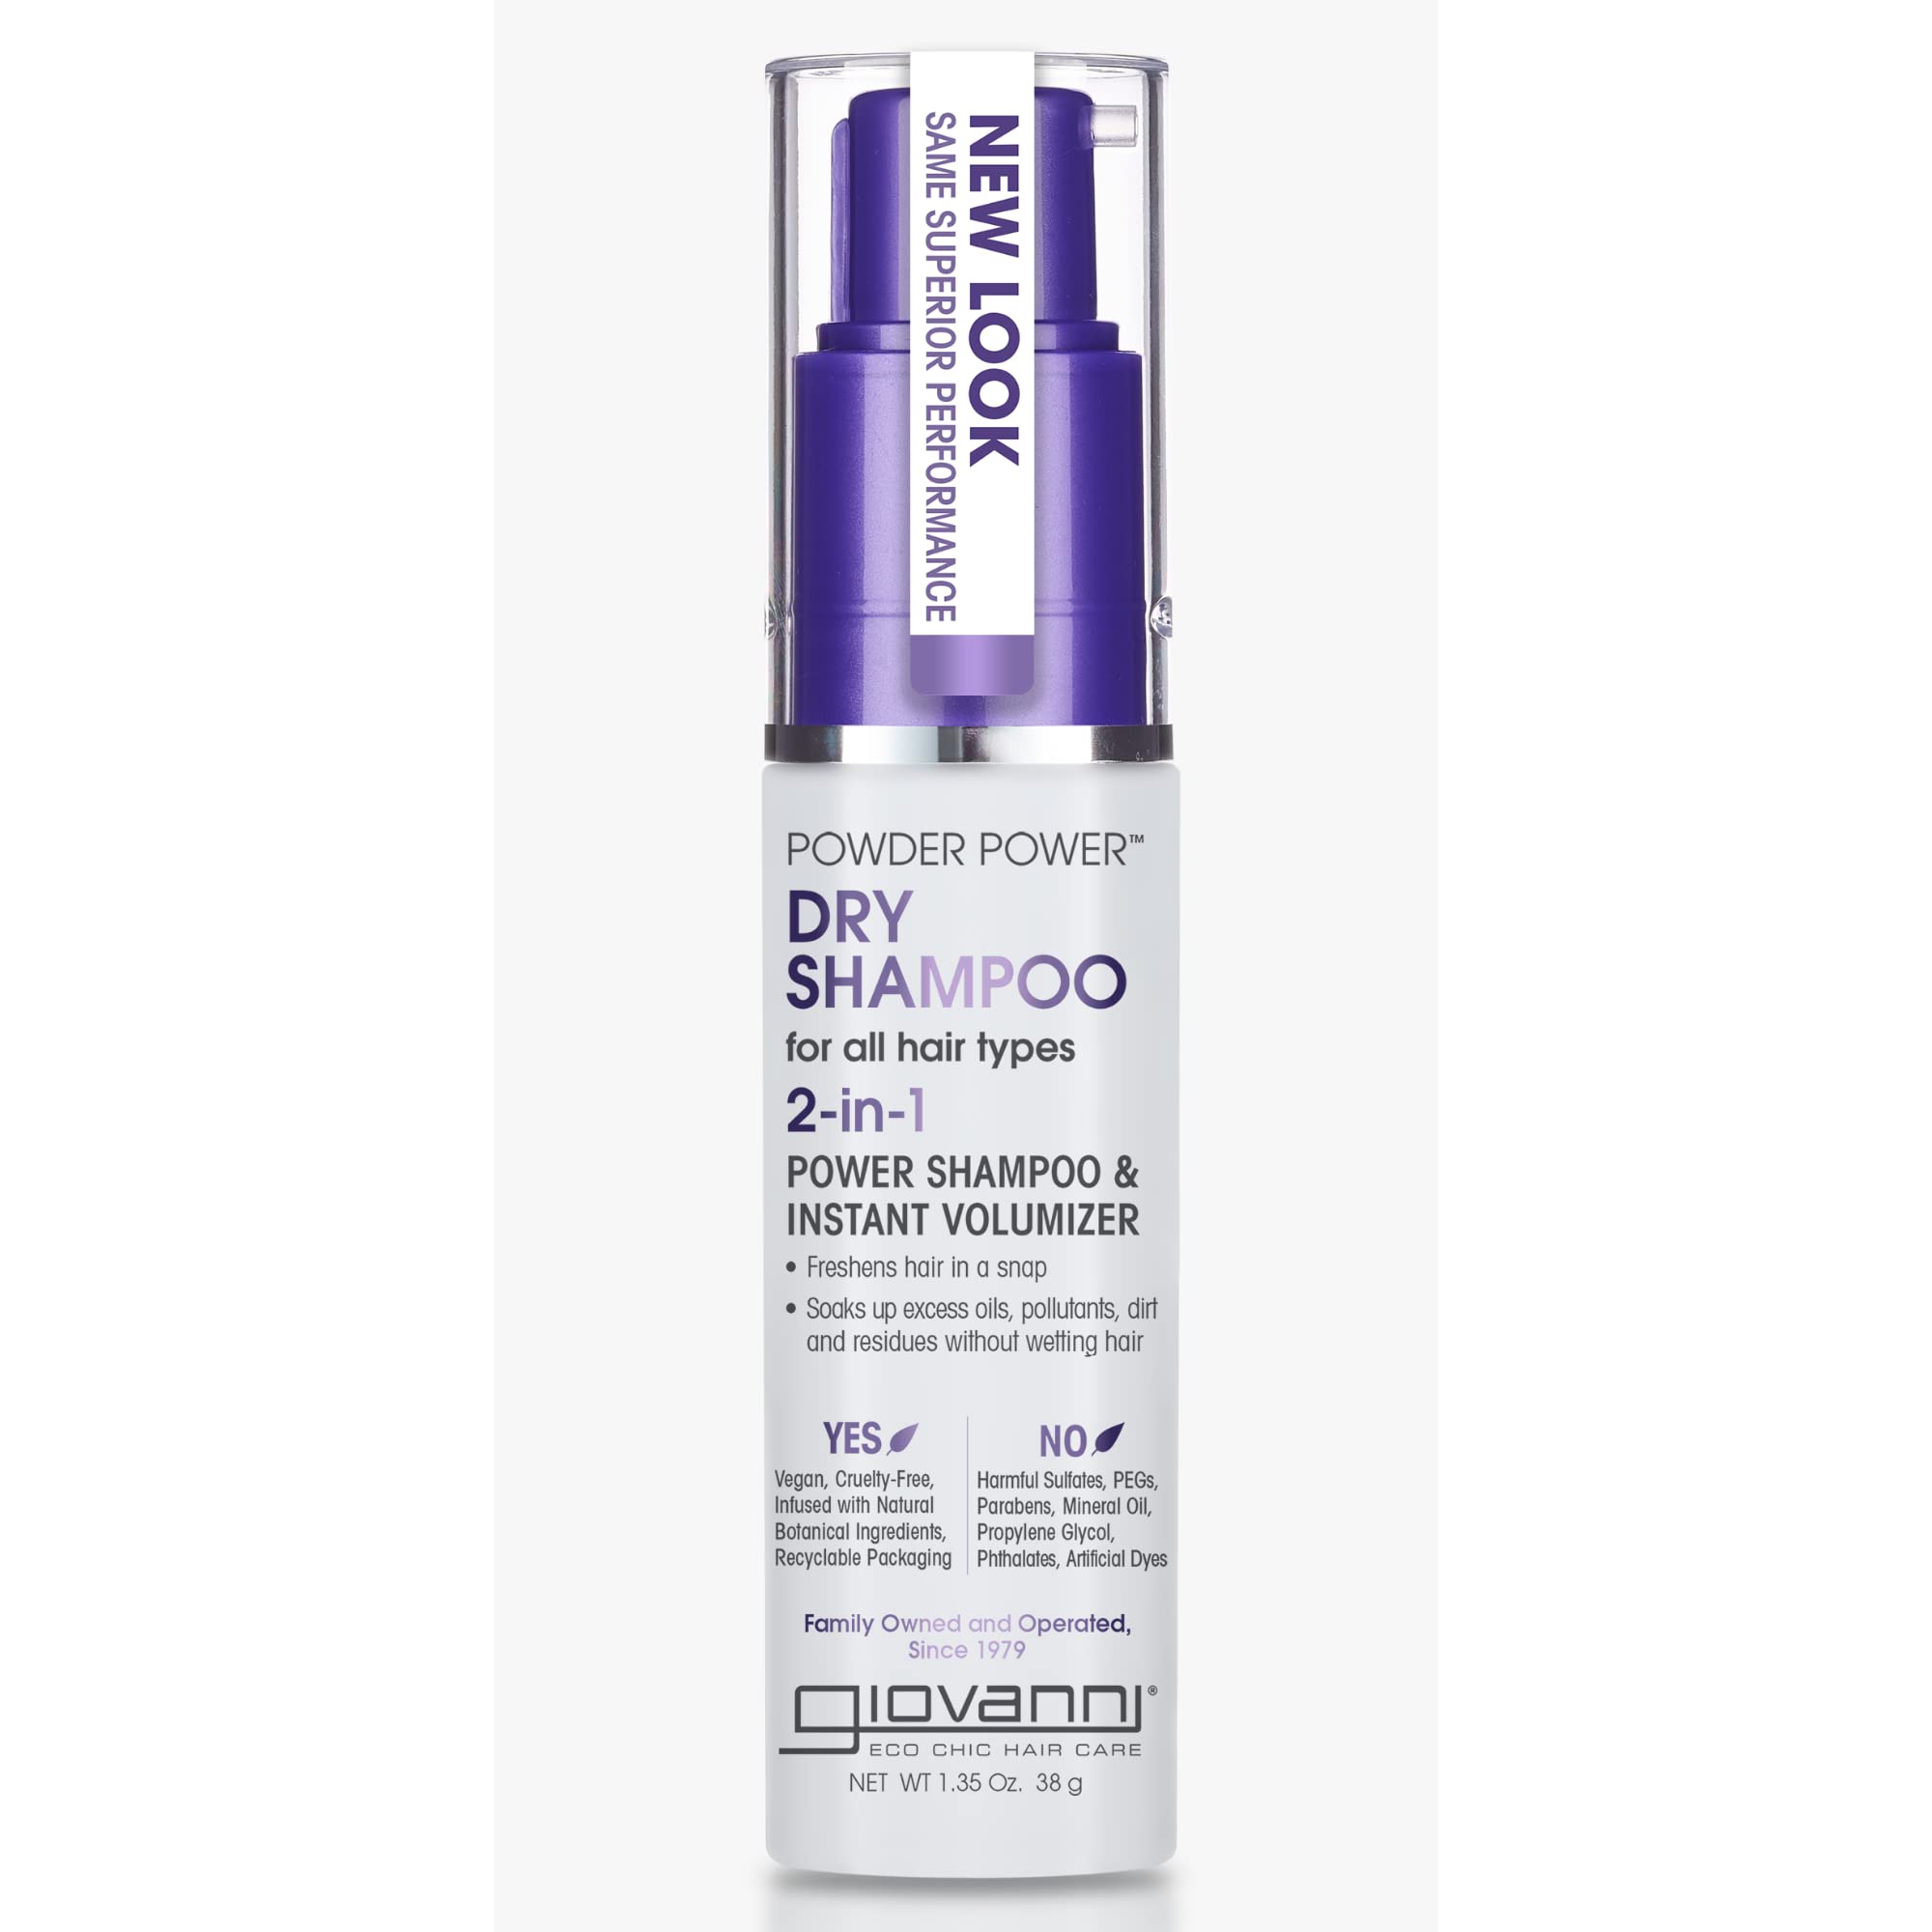 Giovanni Eco Chic Hair Care Powder Power Dry Shampoo  oz (50 g)